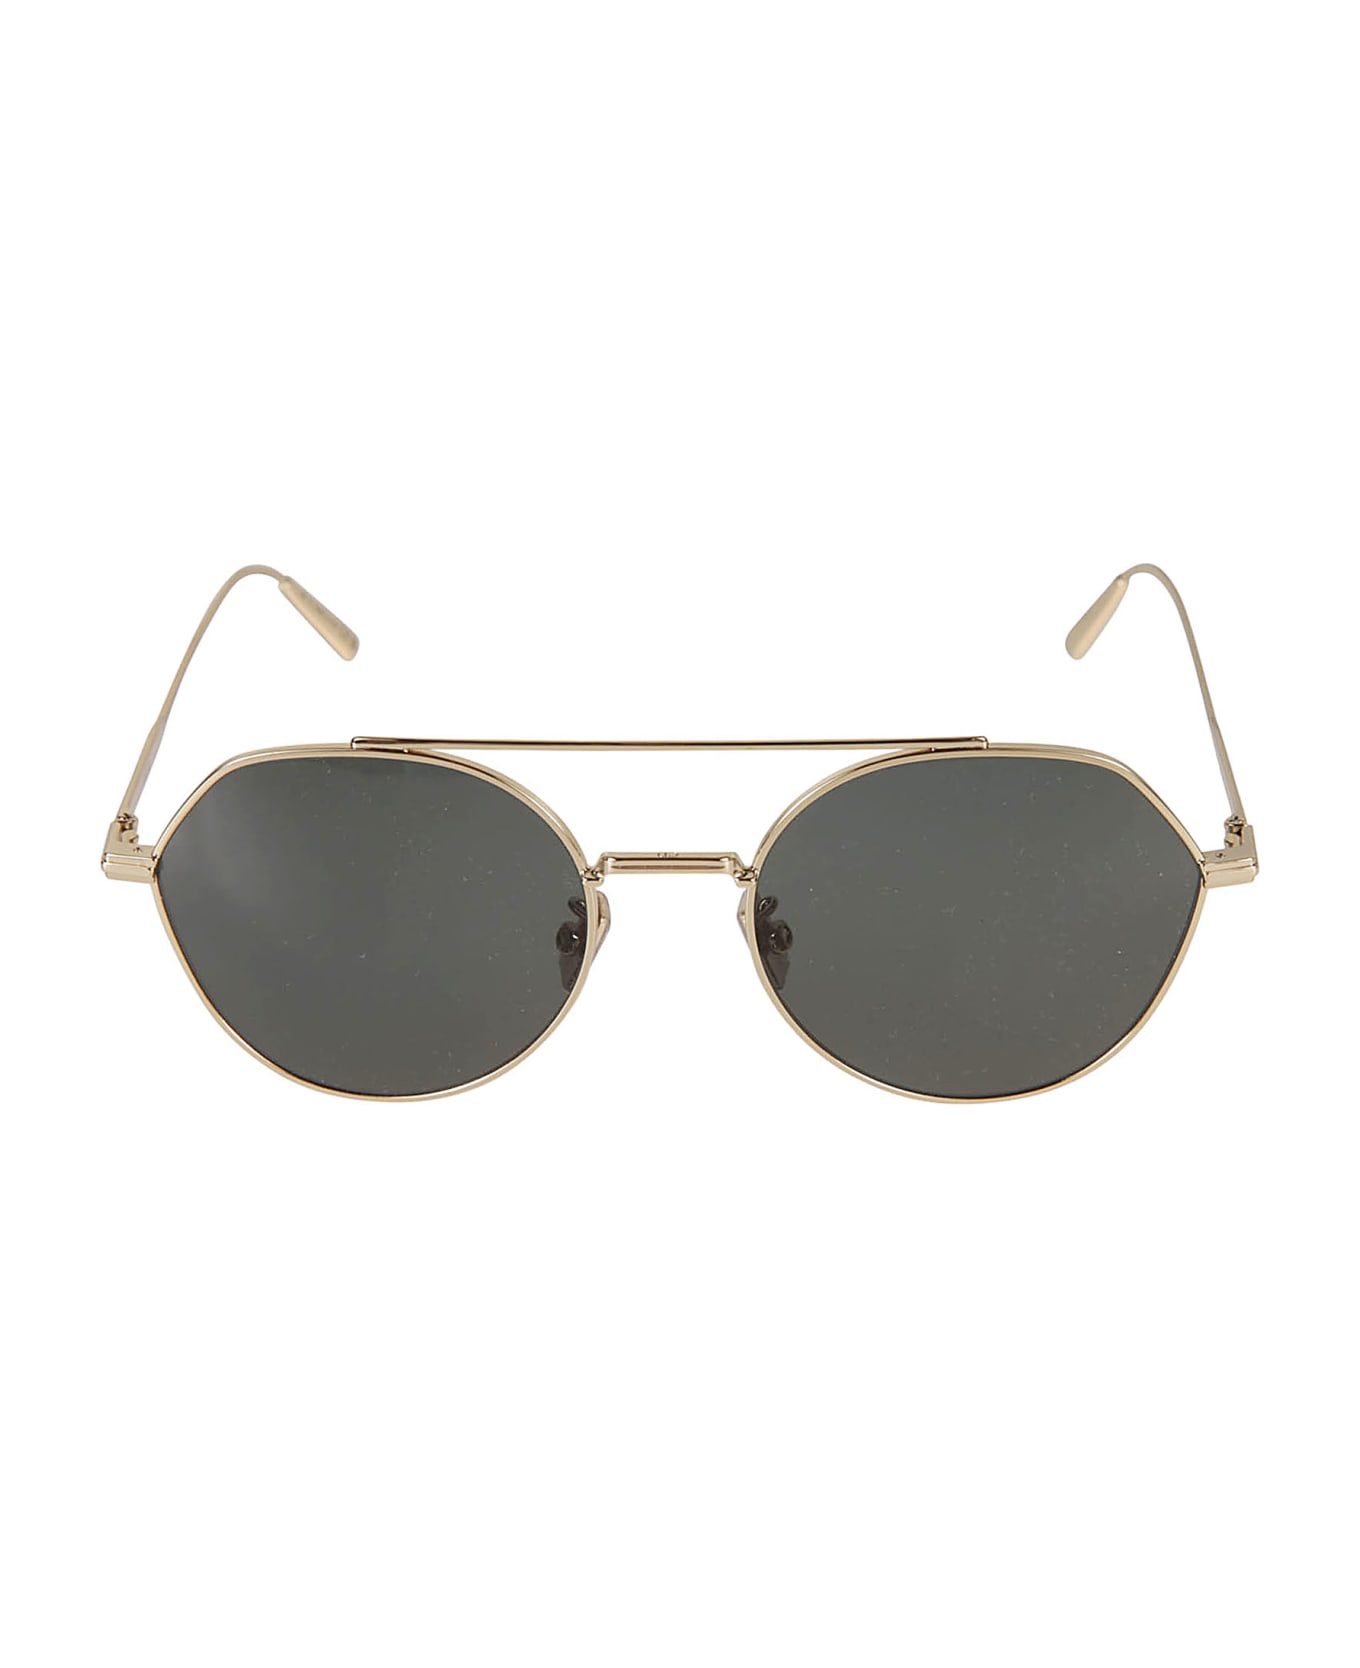 Dior Eyewear Blacksuit Sunglasses - b0c0 サングラス